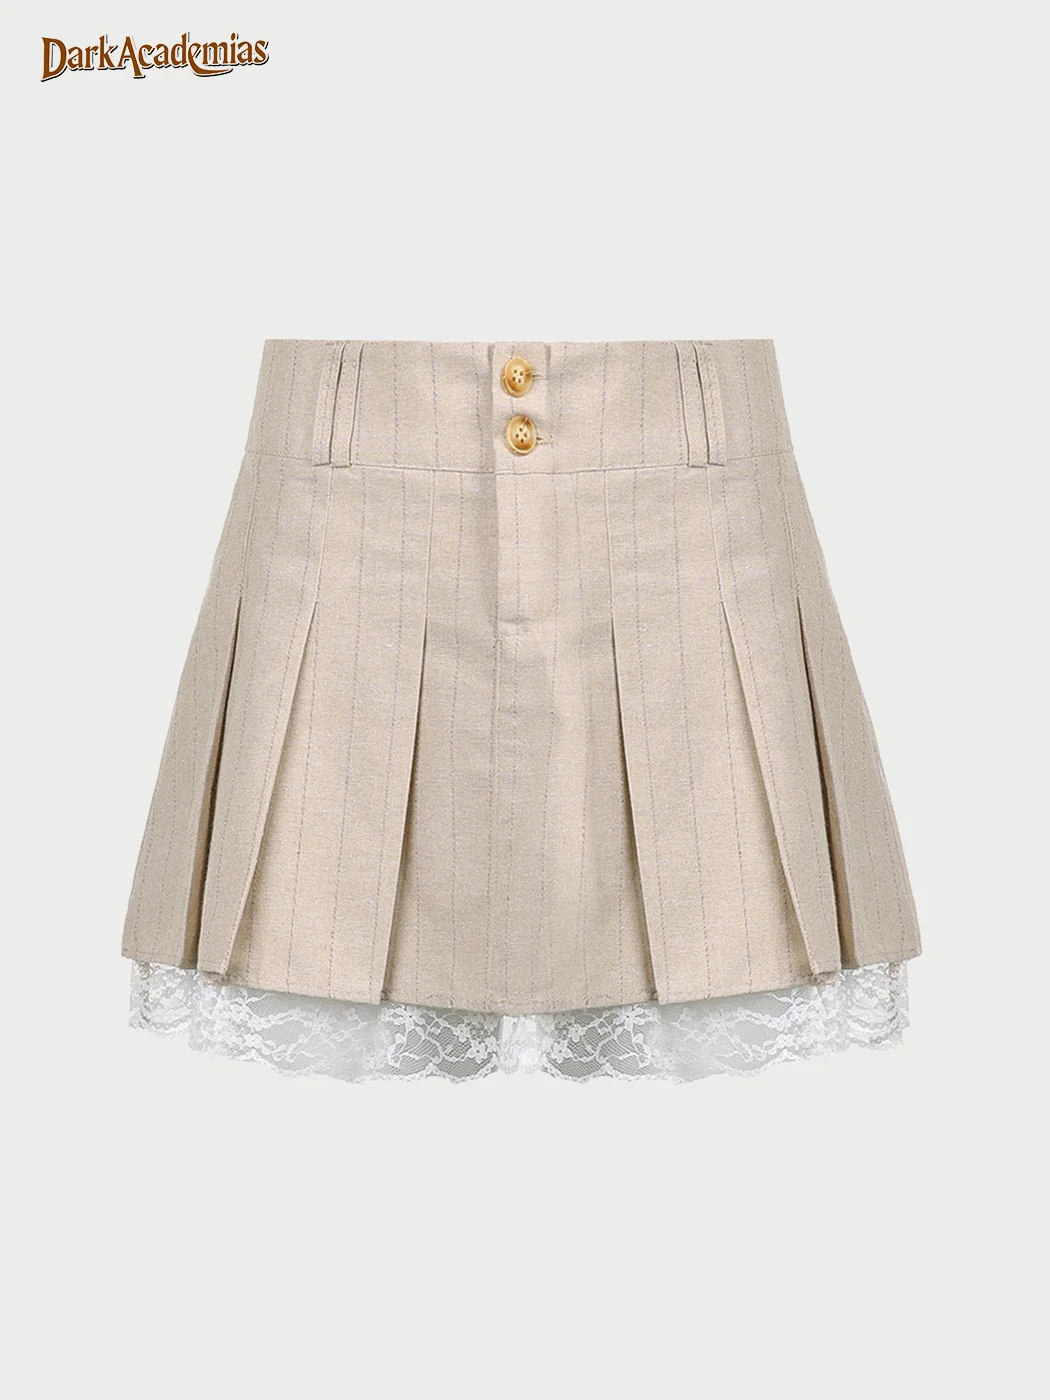 Lace-paneled Vintage-inspired Skirt / DarkAcademias /Darkacademias